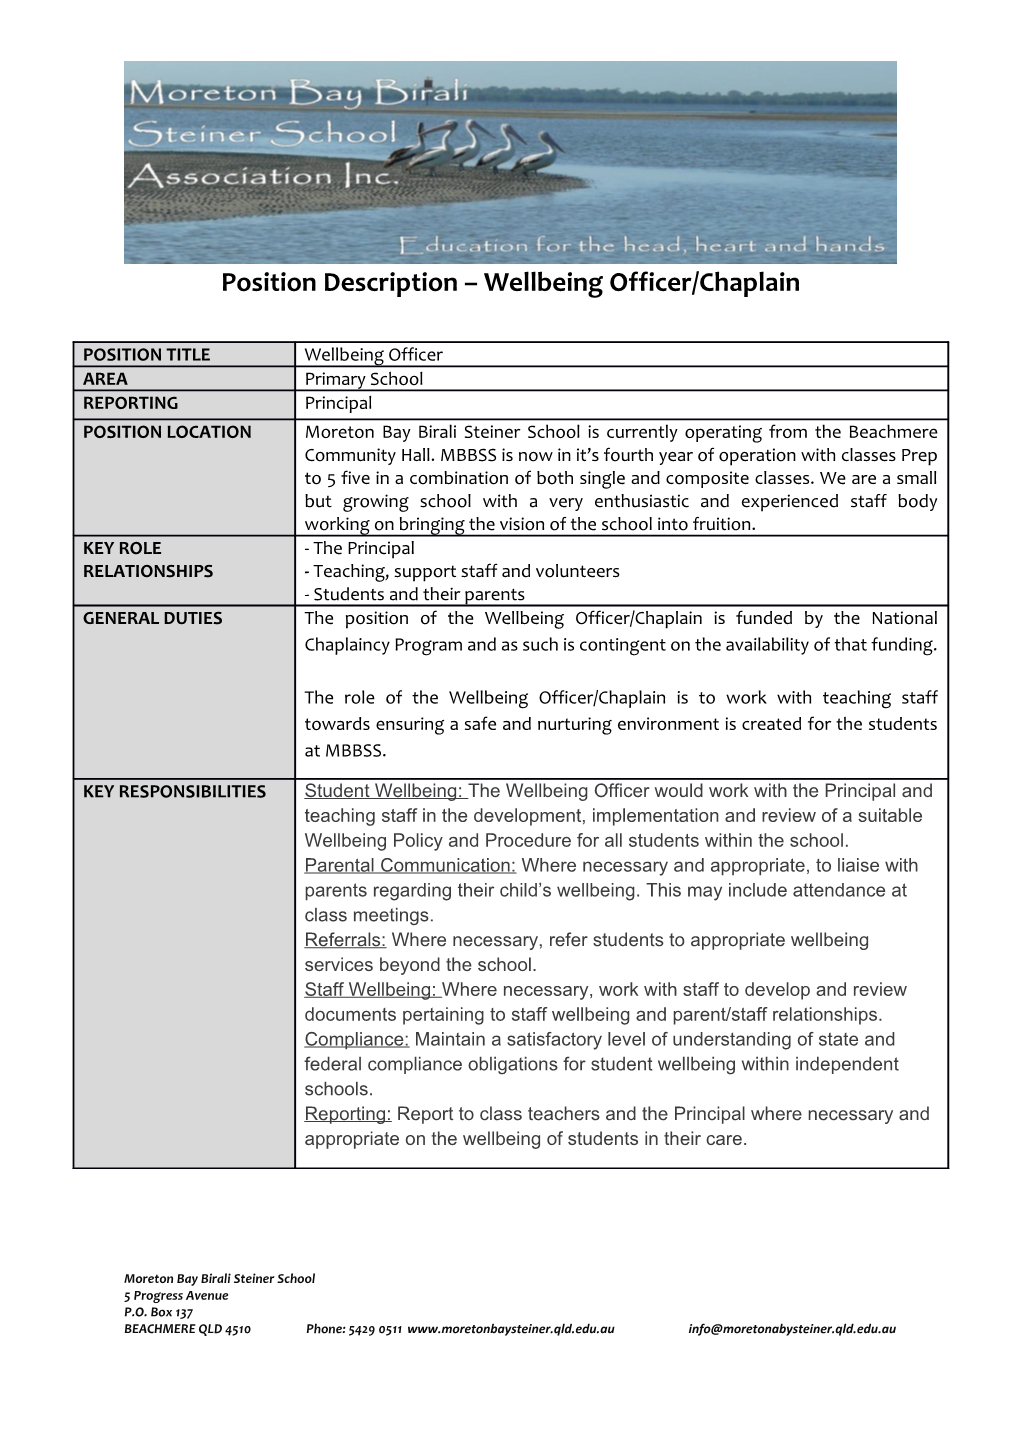 Position Description Wellbeing Officer/Chaplain